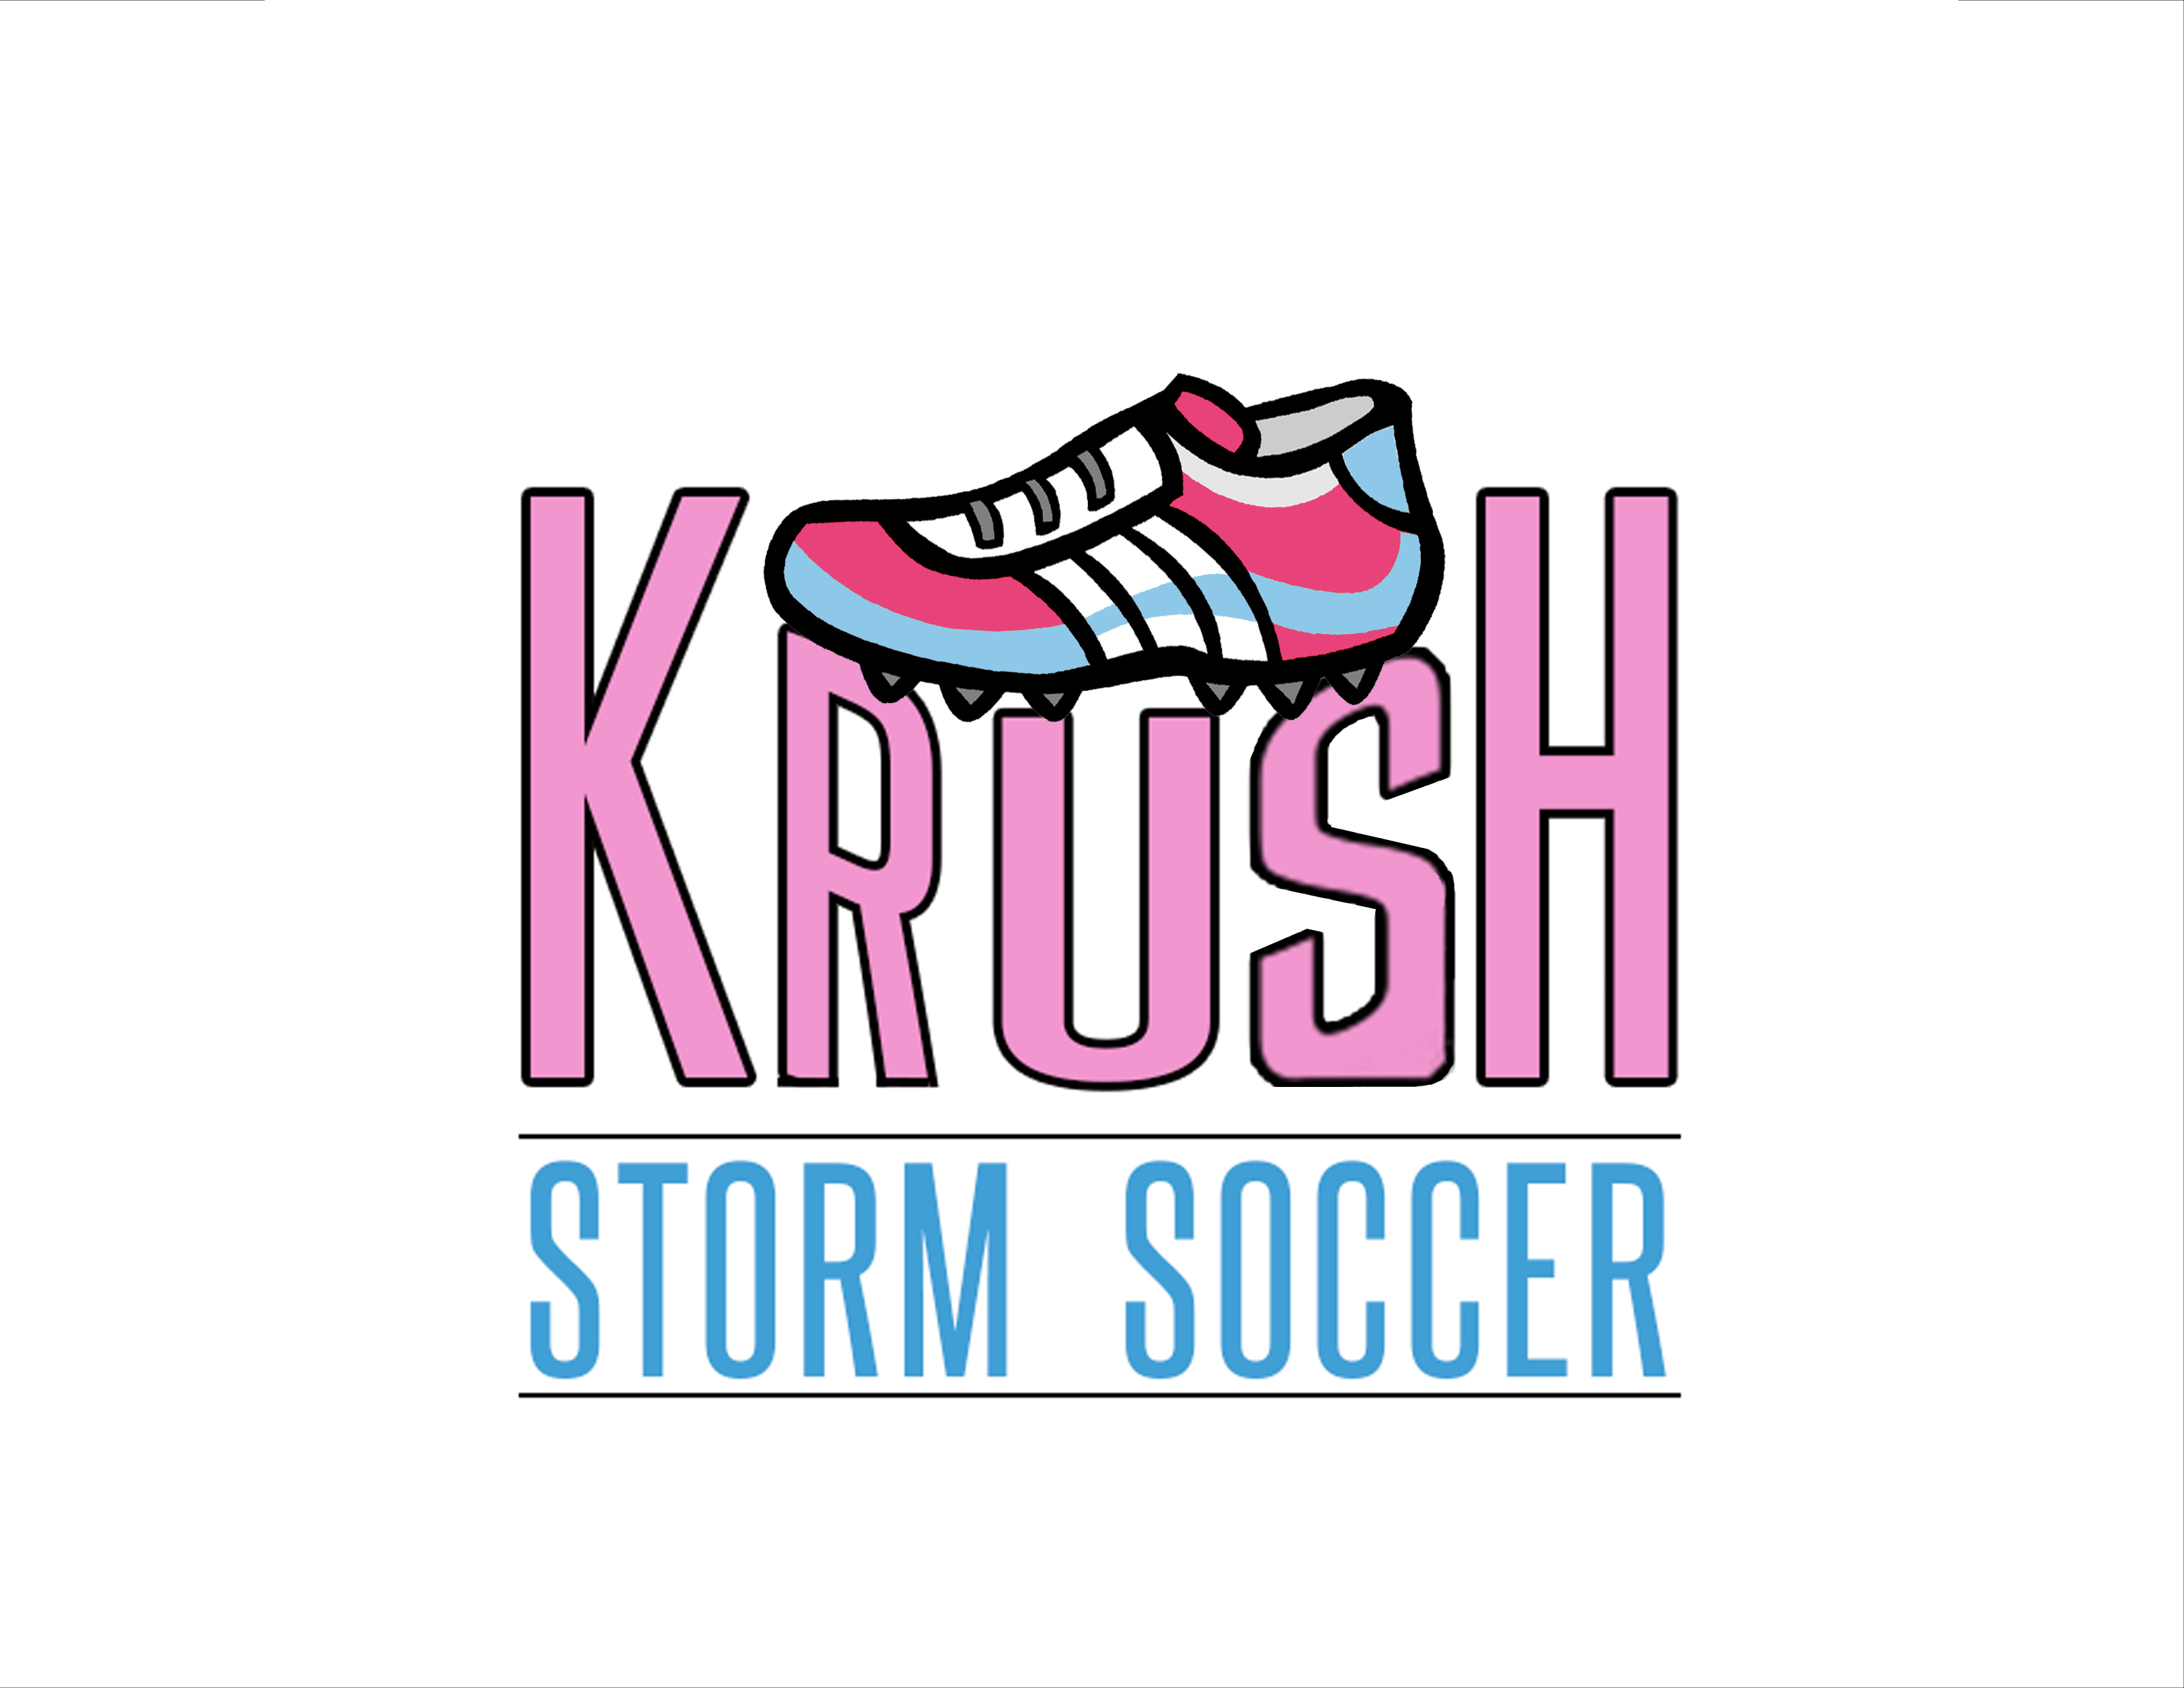 Storm Soccer Academy Sweet Feet Krush 2015